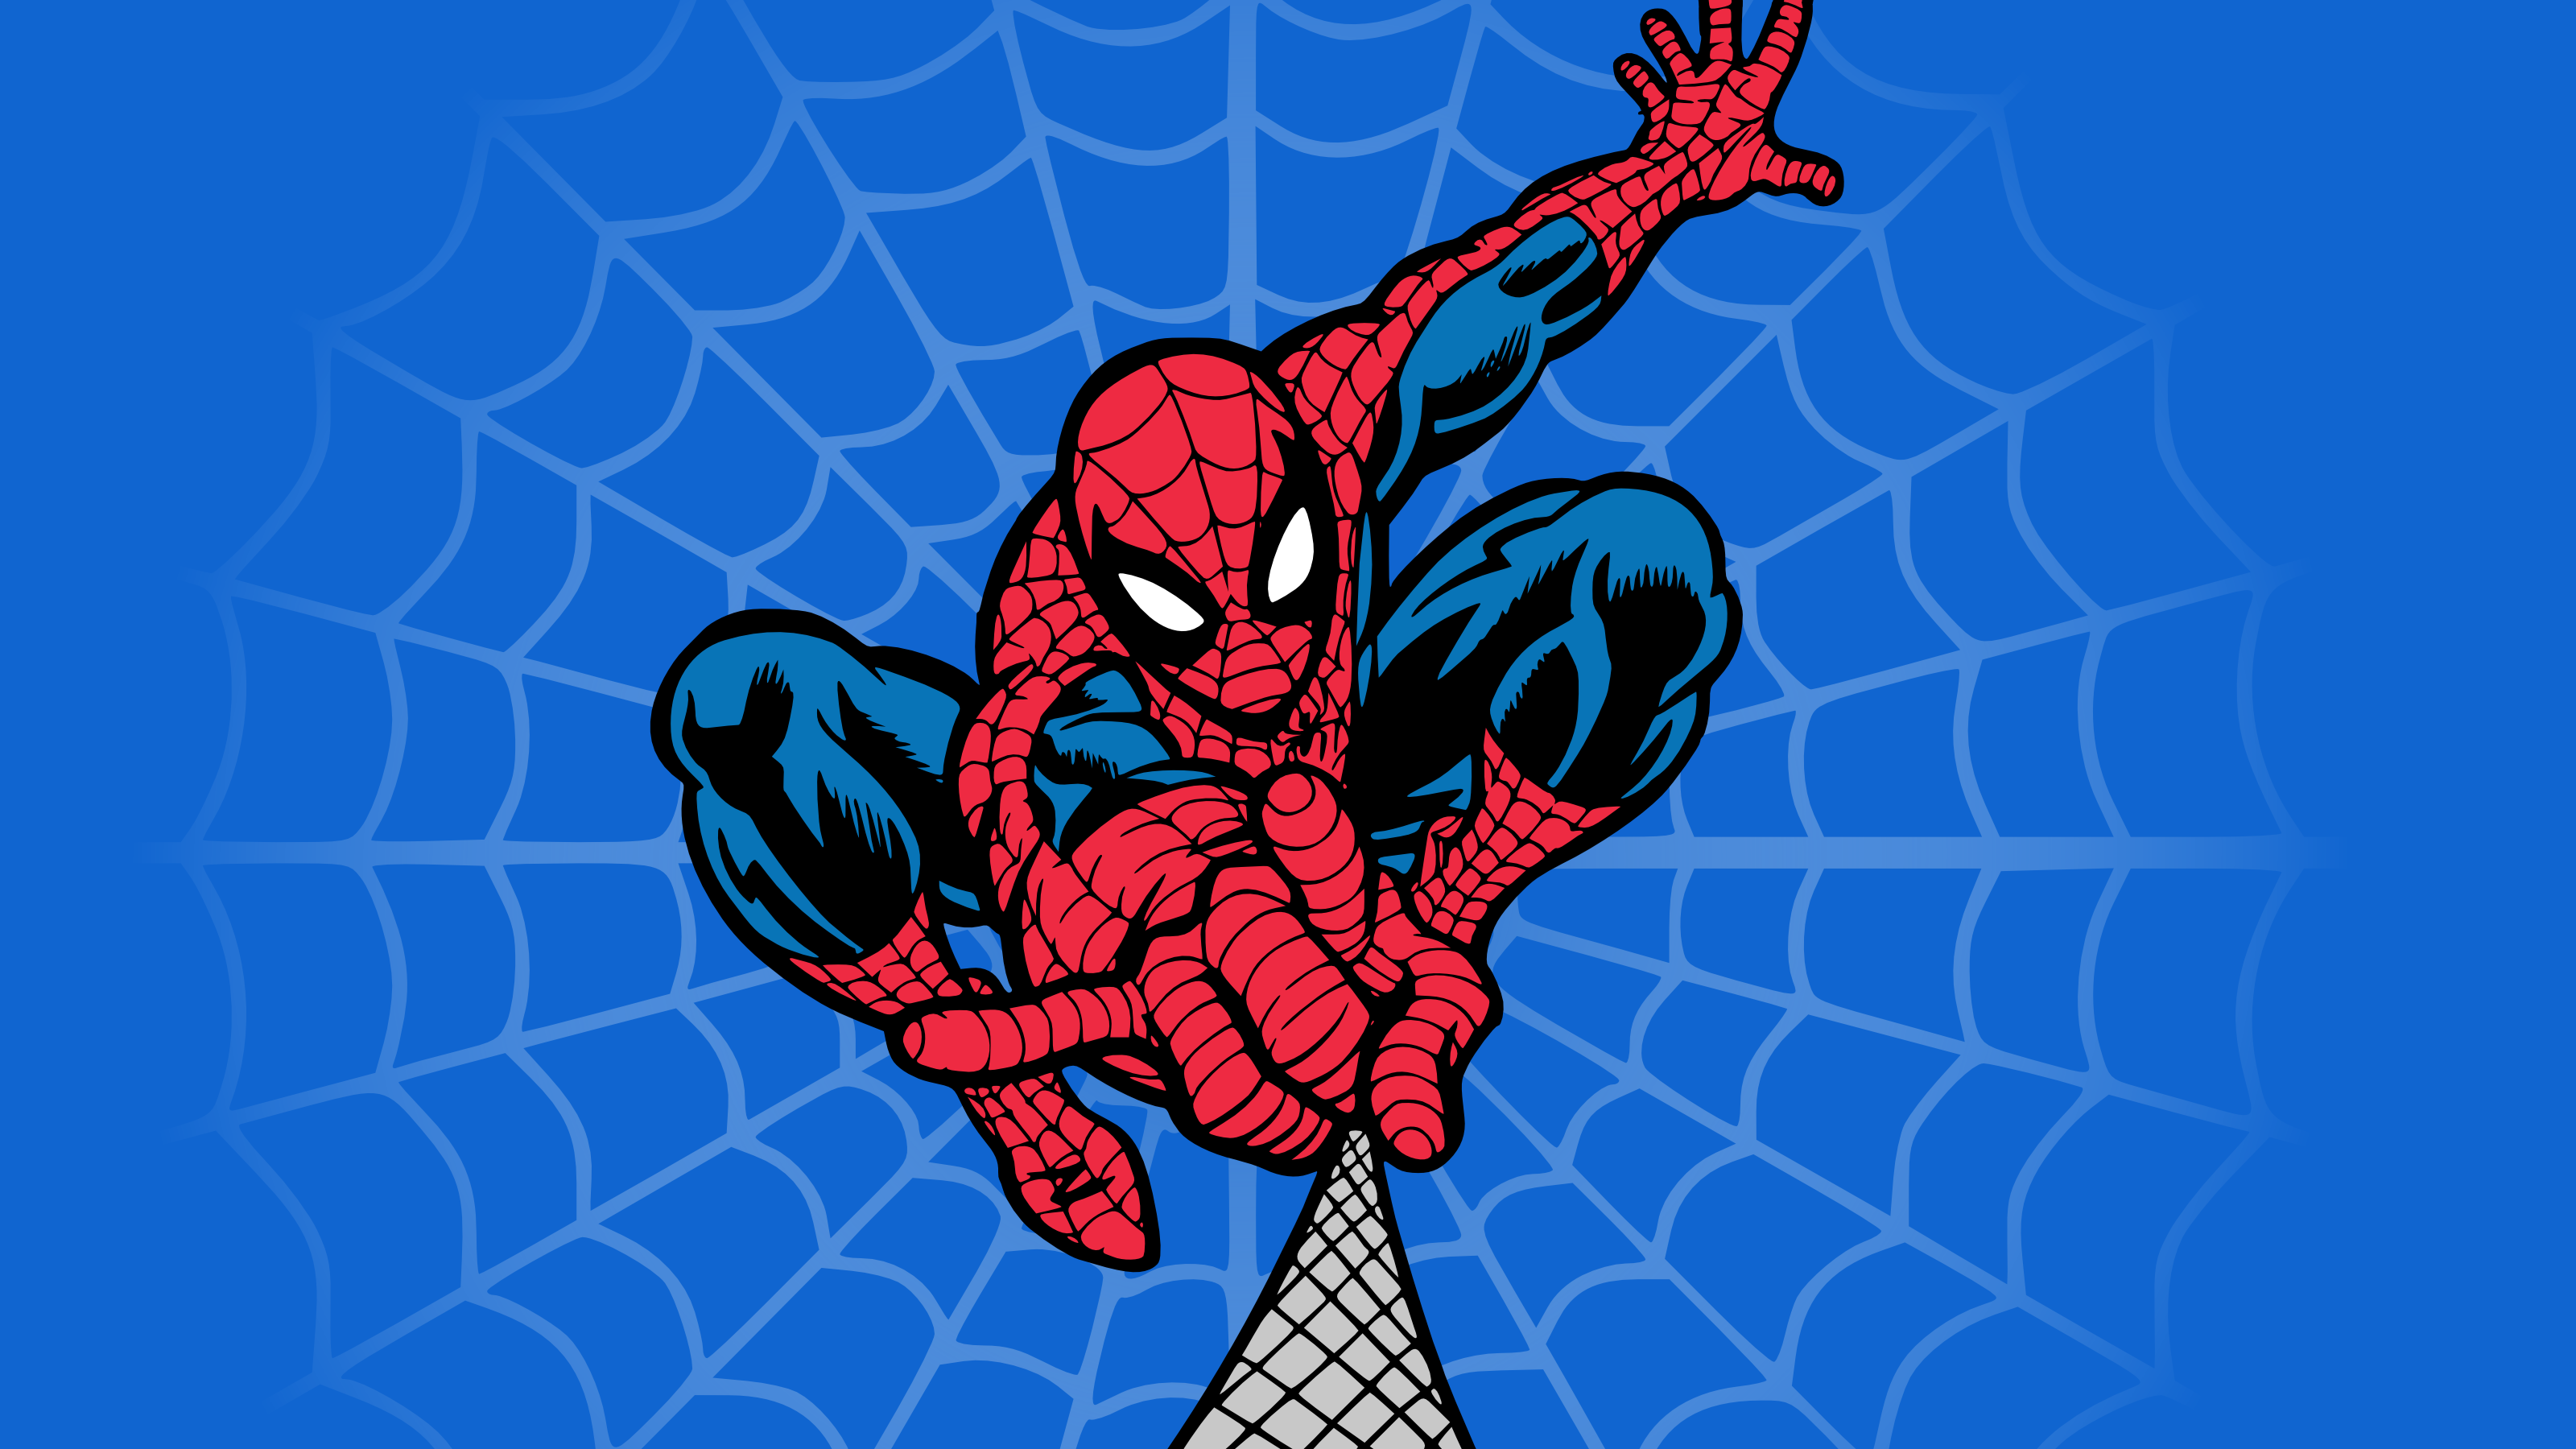 Spiderman comics spider man superhero wallpaper 3200x1800